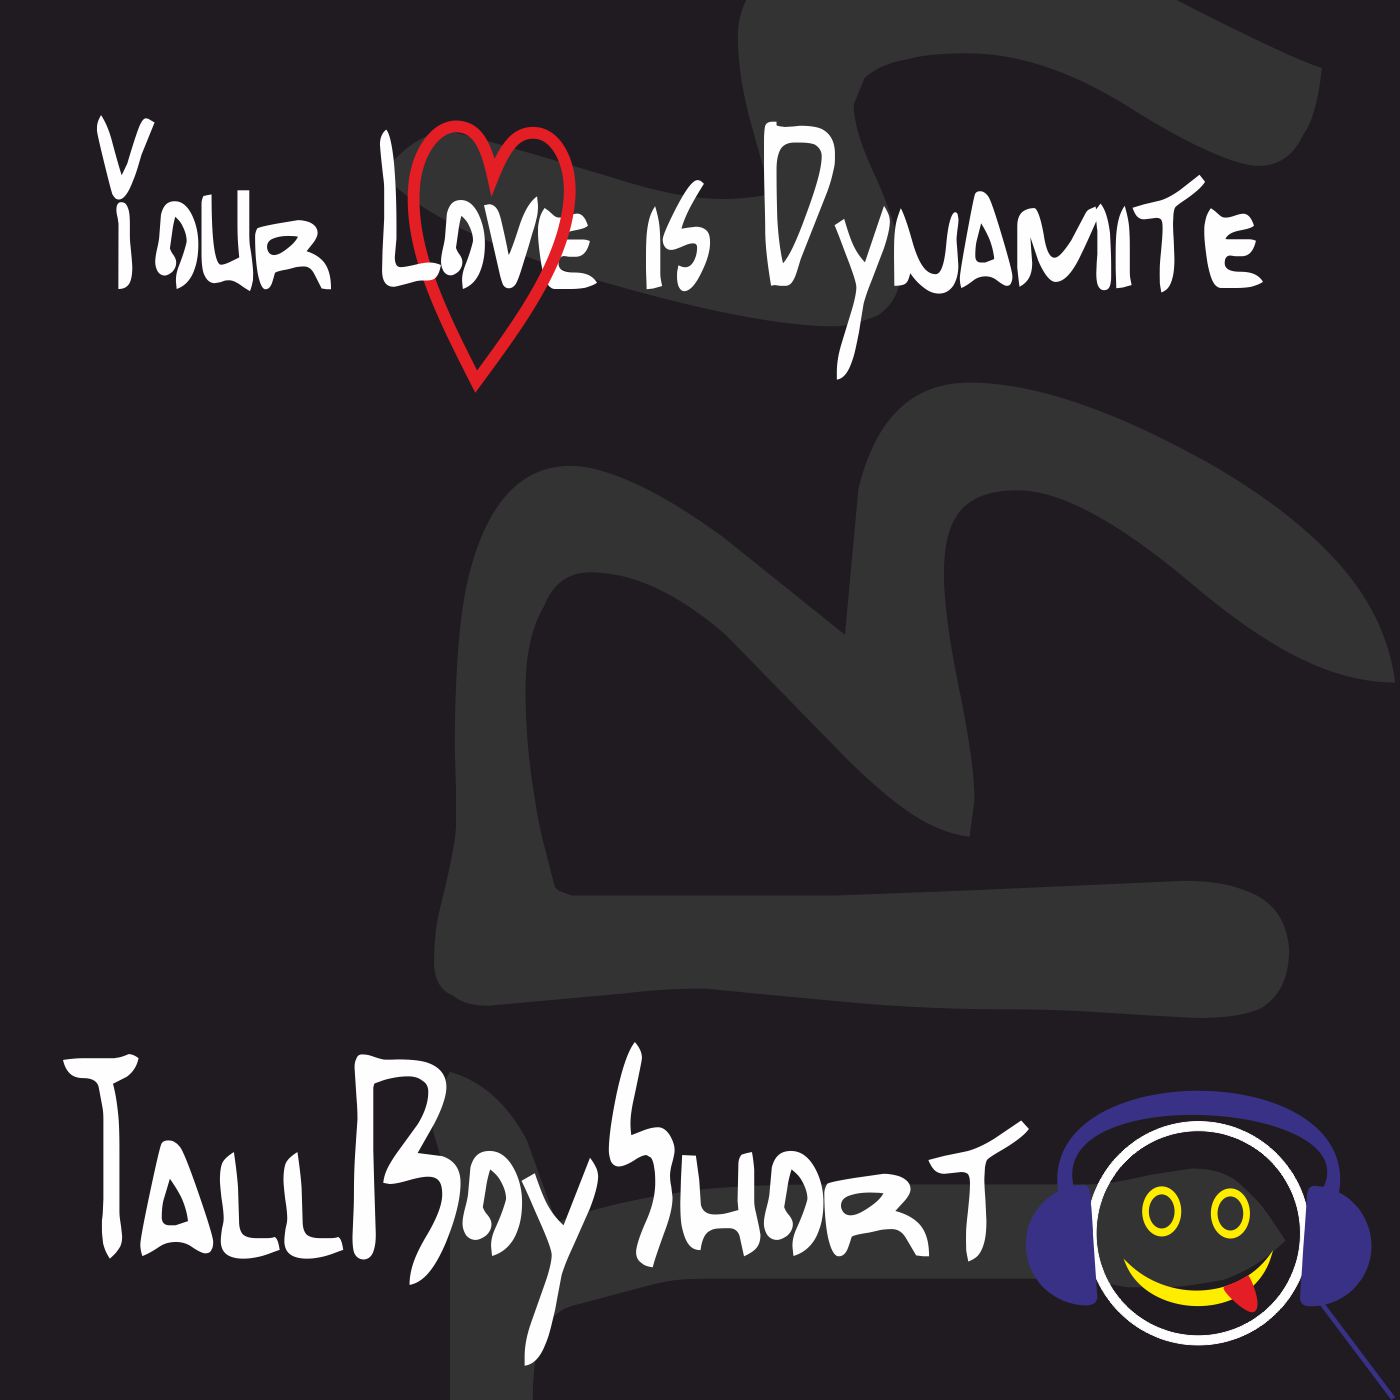 TallBoyShort Your Love is Dynamite